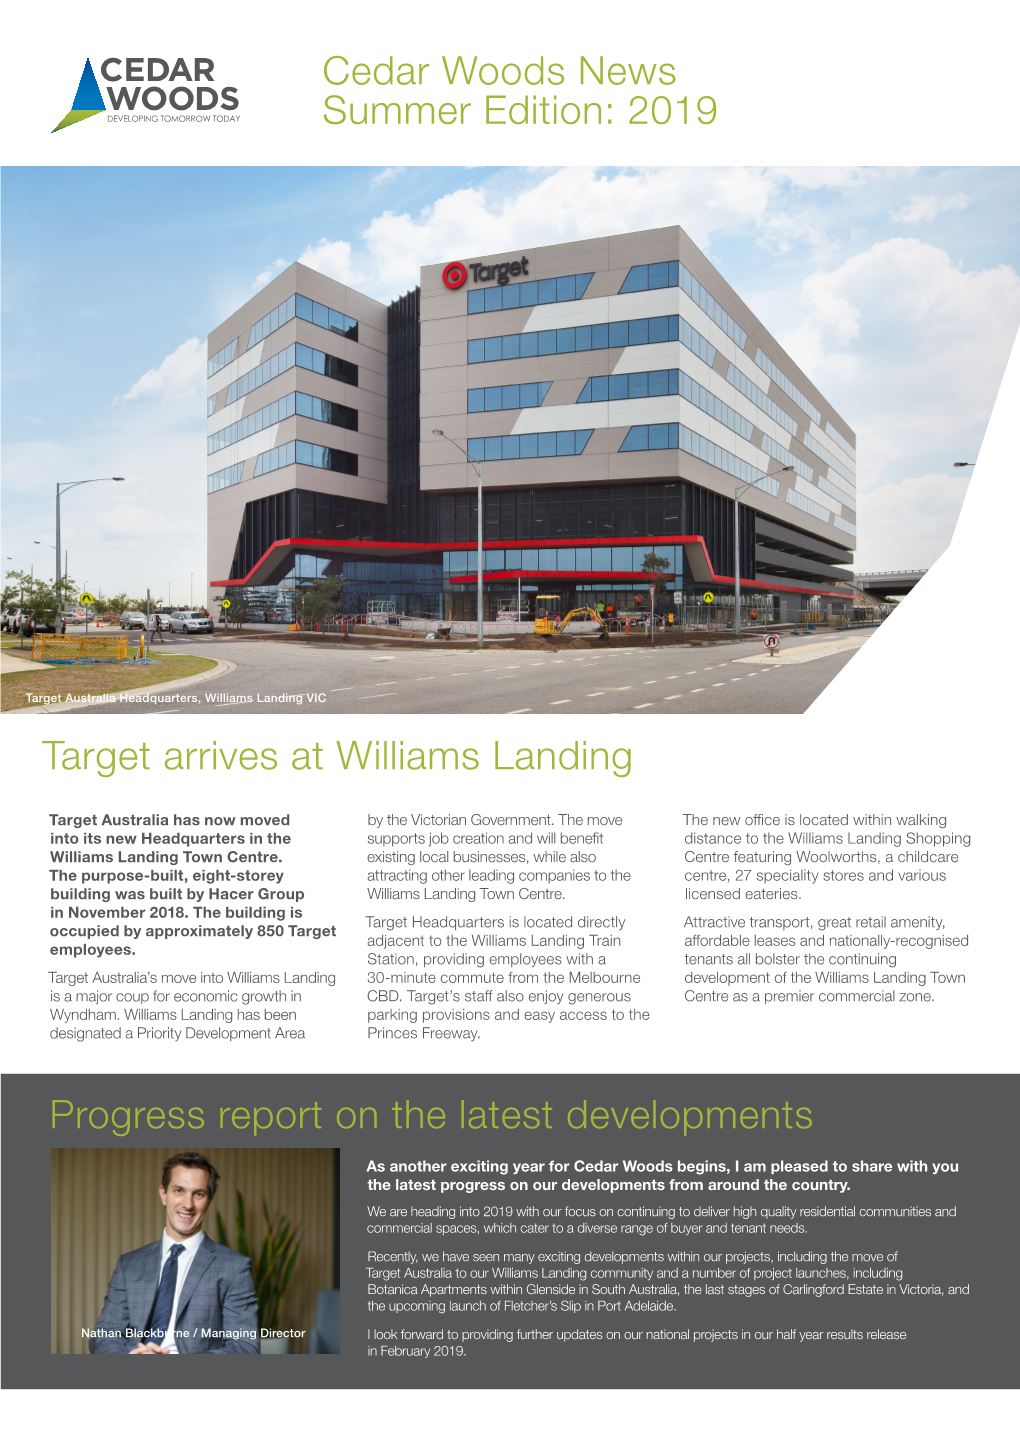 Target Arrives at Williams Landing Cedar Woods News Summer Edition: 2019 Progress Report on the Latest Developments